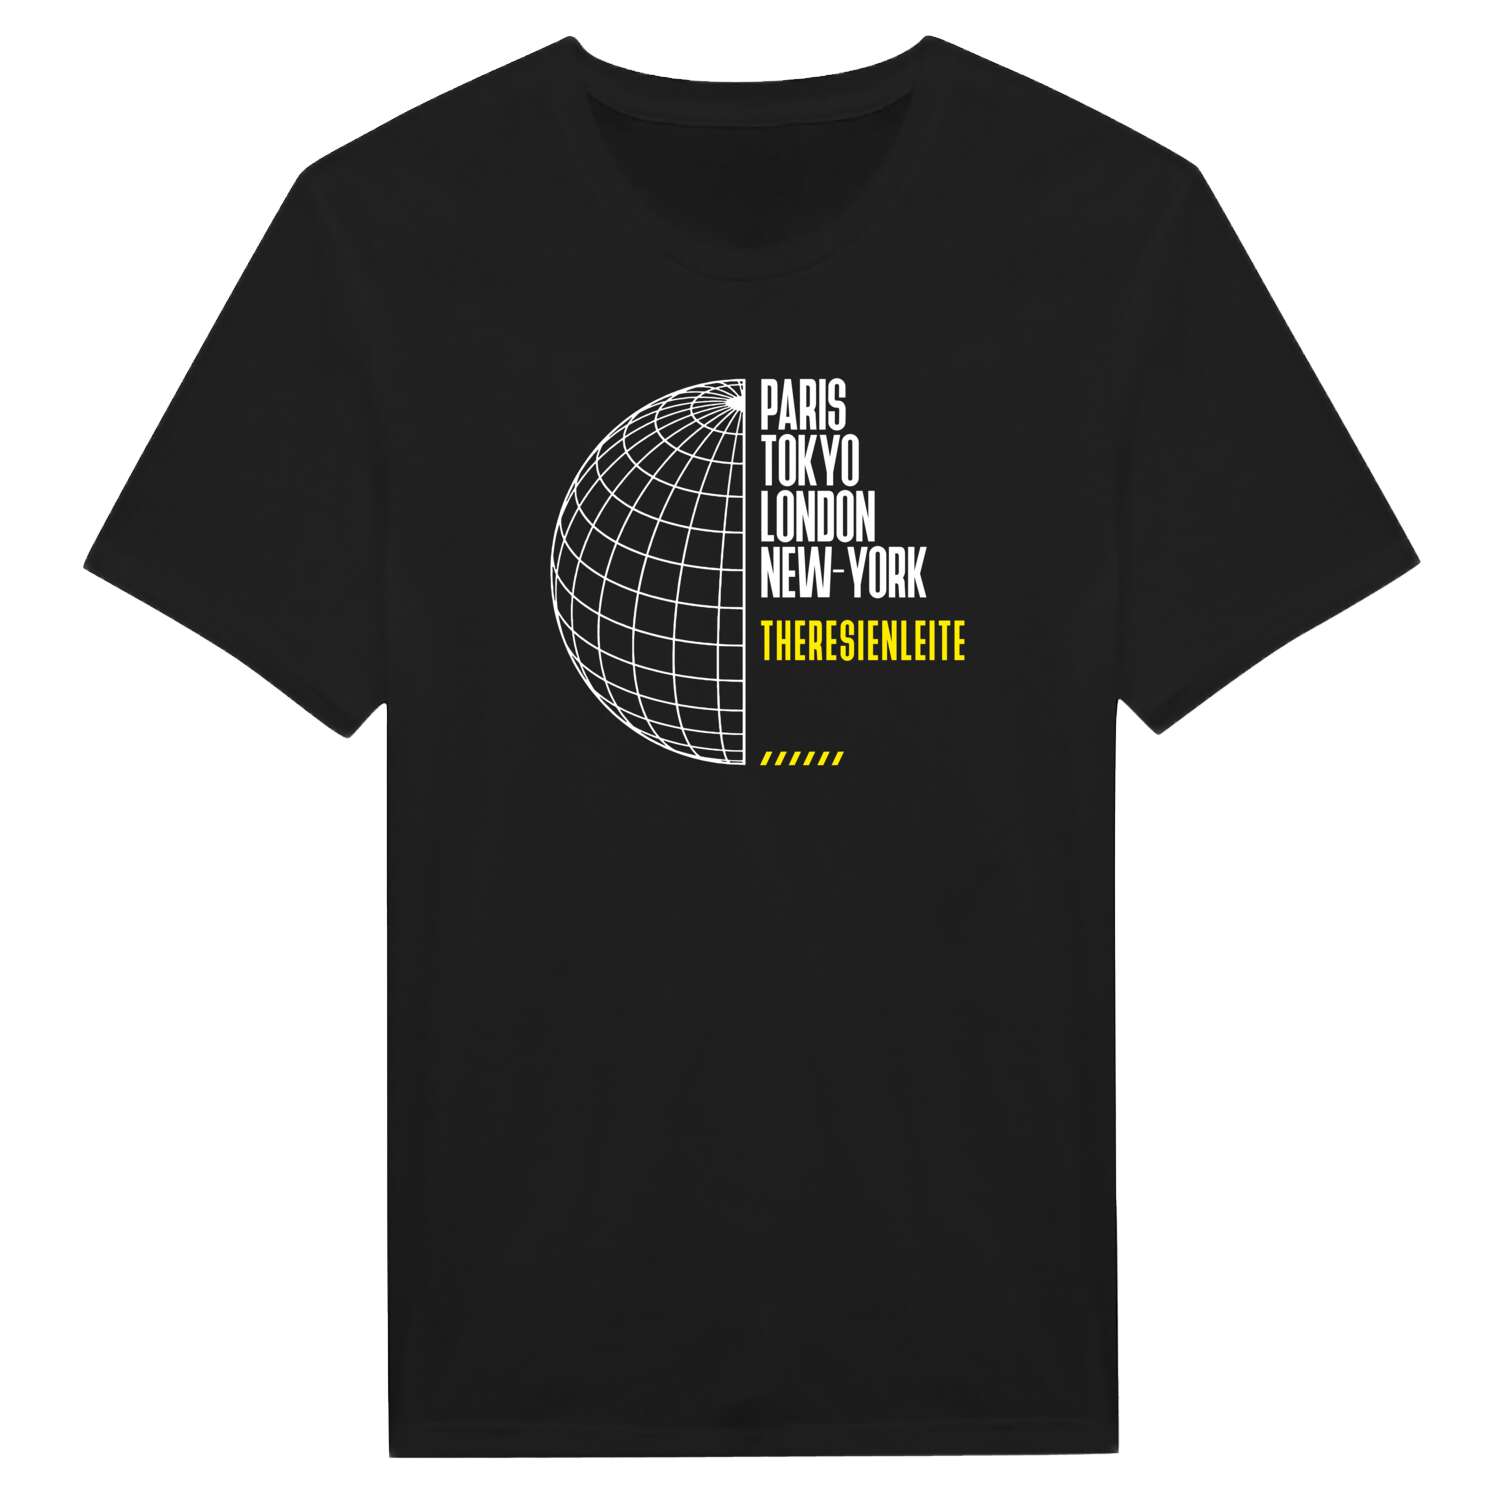 Theresienleite T-Shirt »Paris Tokyo London«